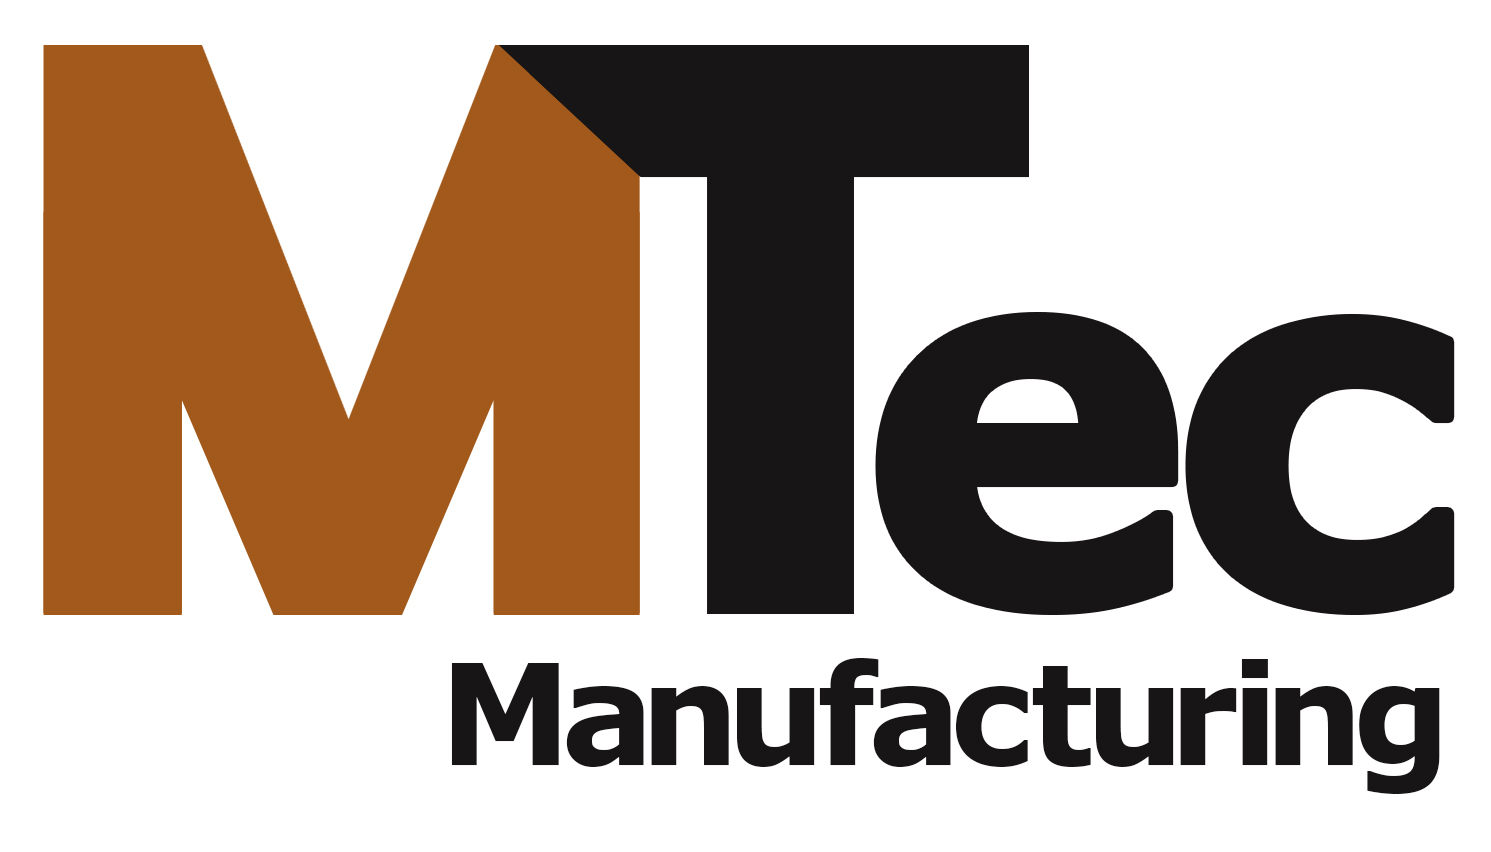 MTEC Manufacturing